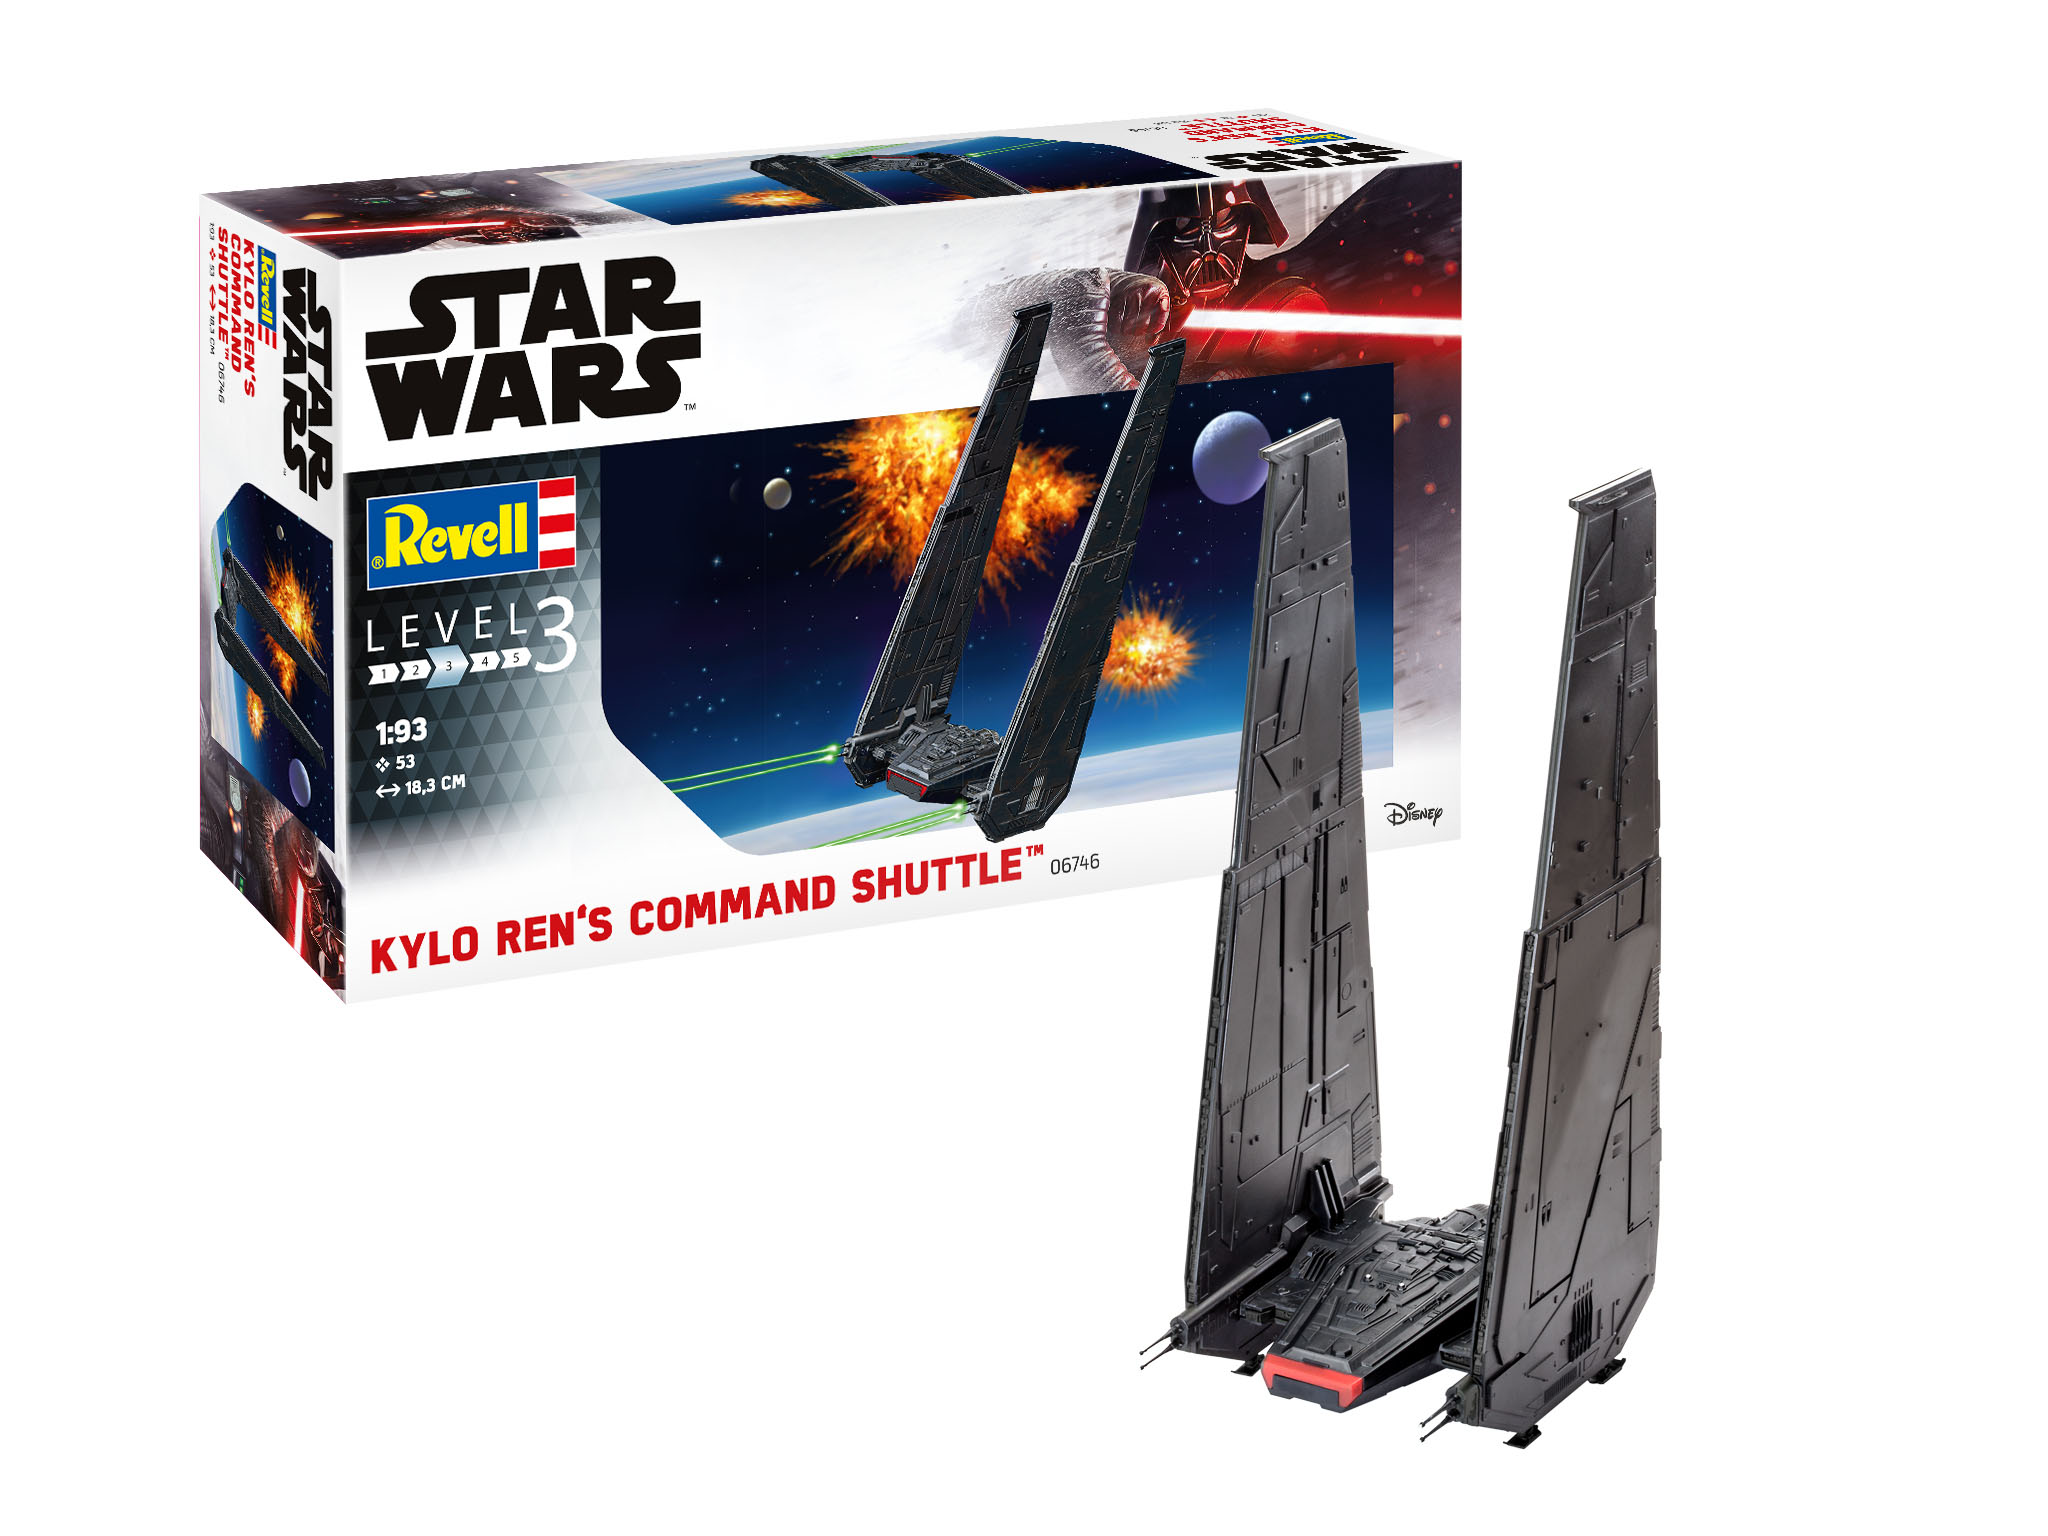 Revell Star Wars Kylo Ren's Command Shuttle 1:93 bouwpakket